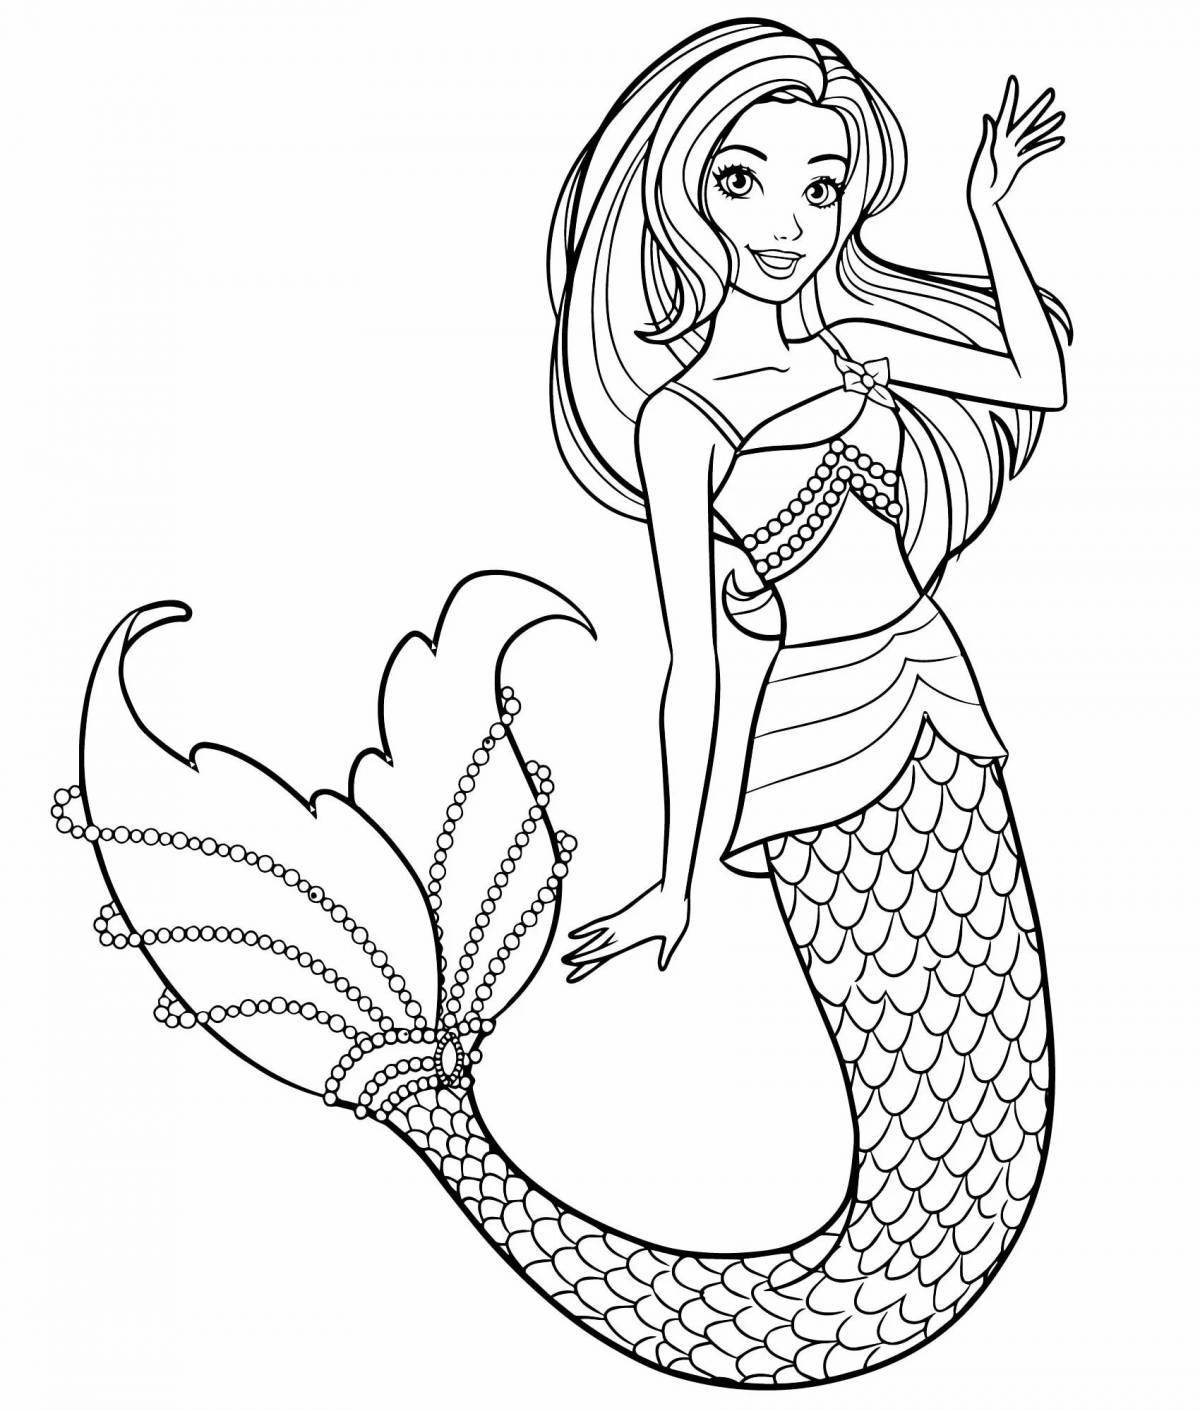 Fancy mermaid queen coloring page